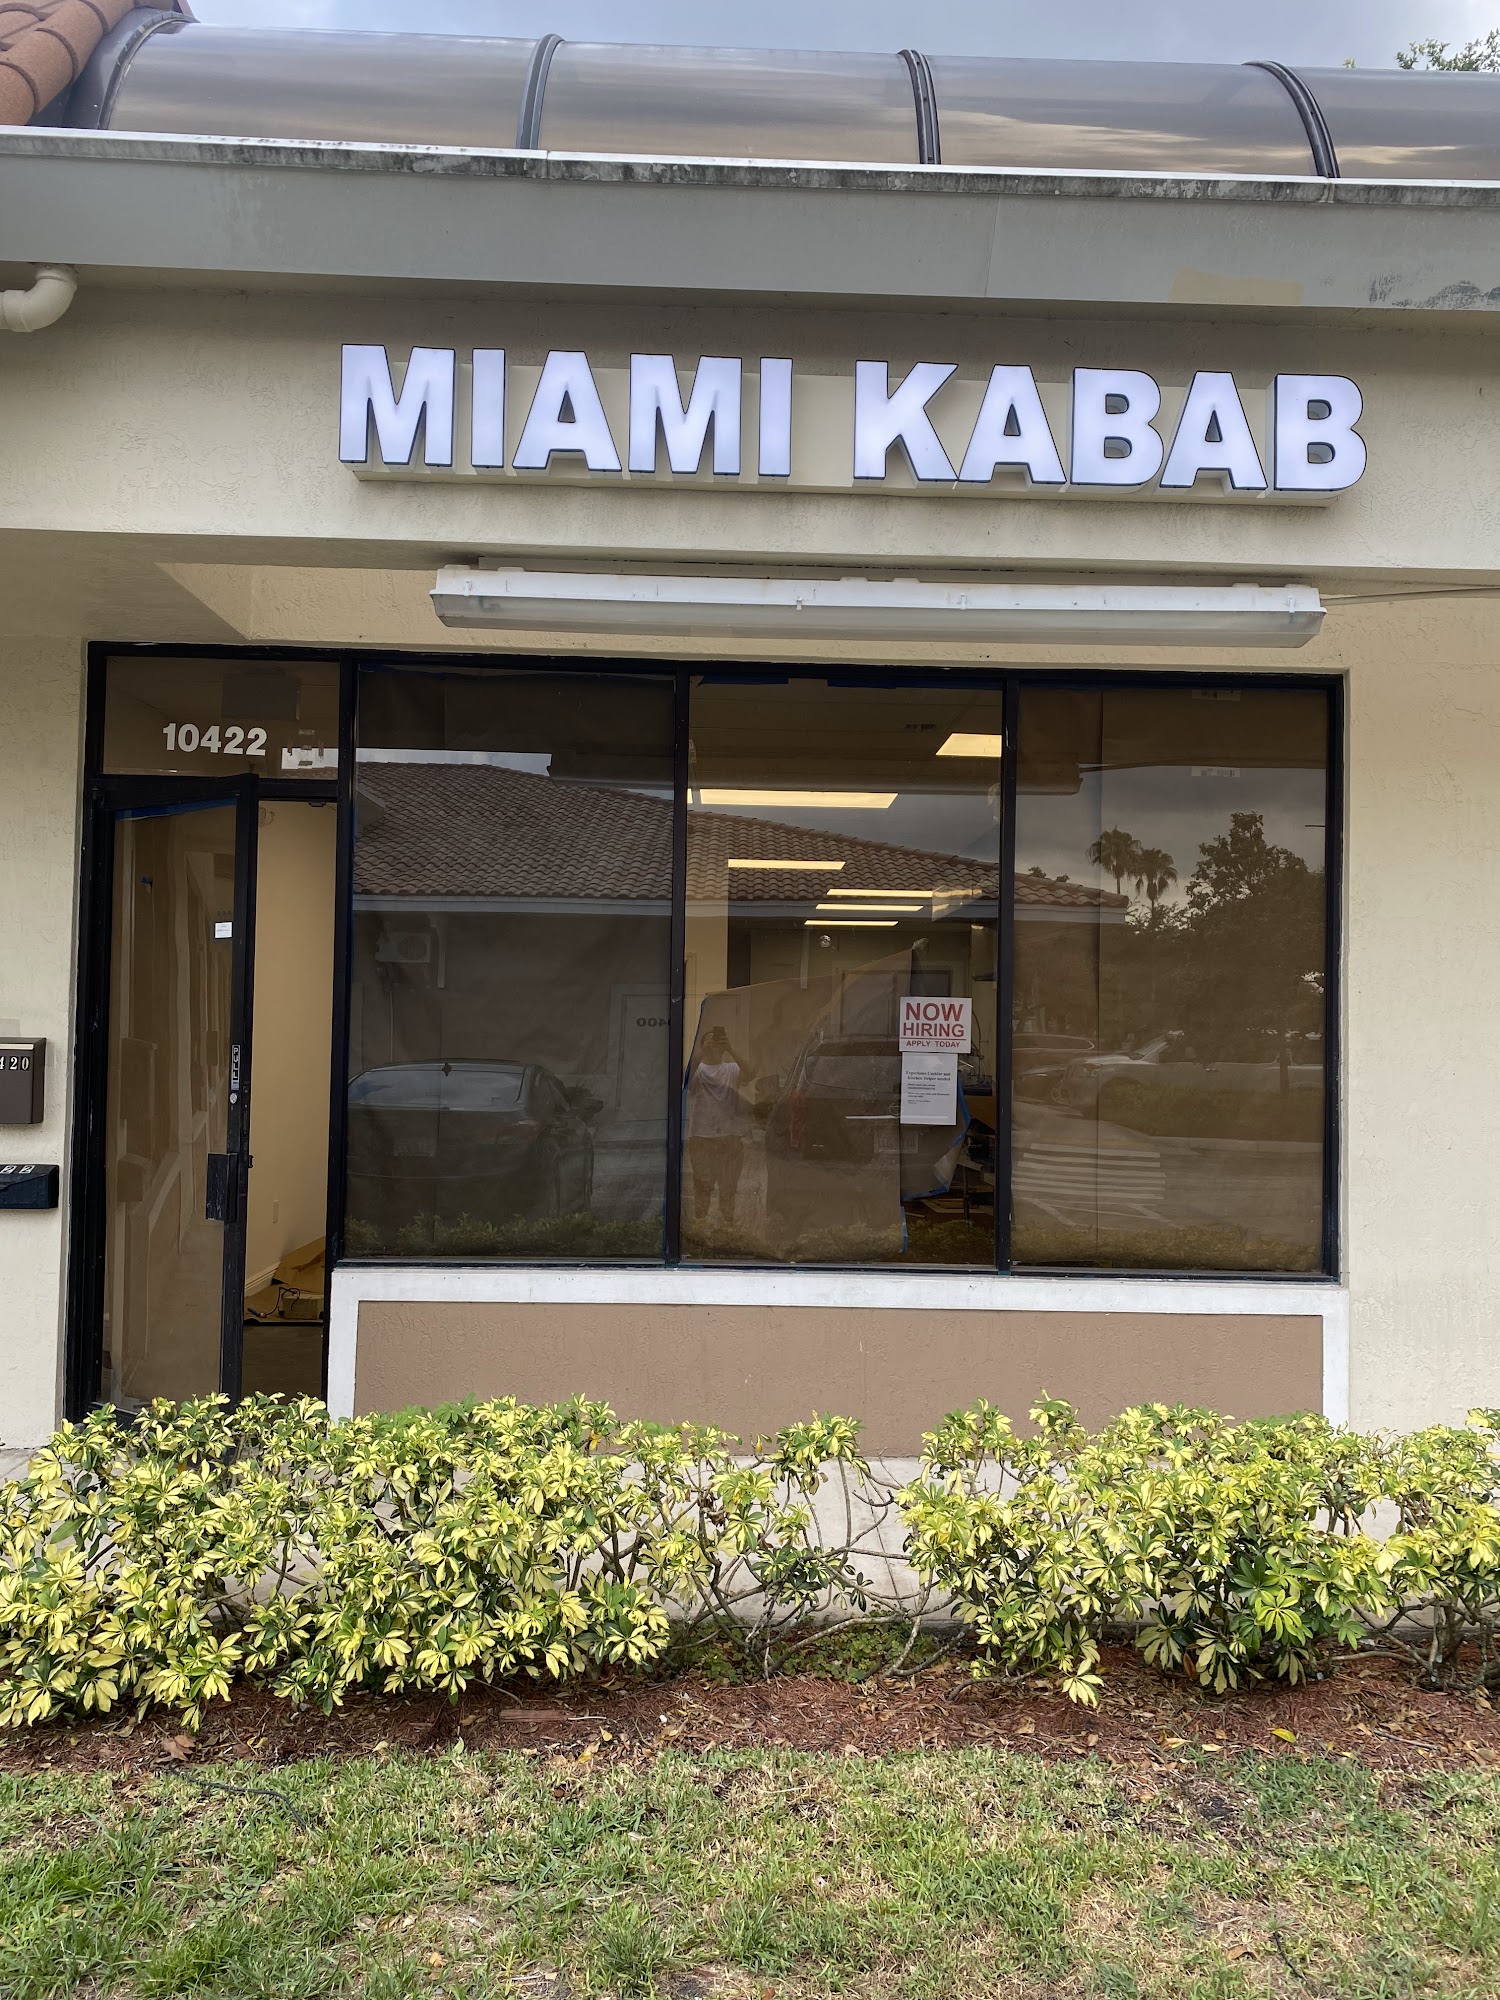 Miami Kabab